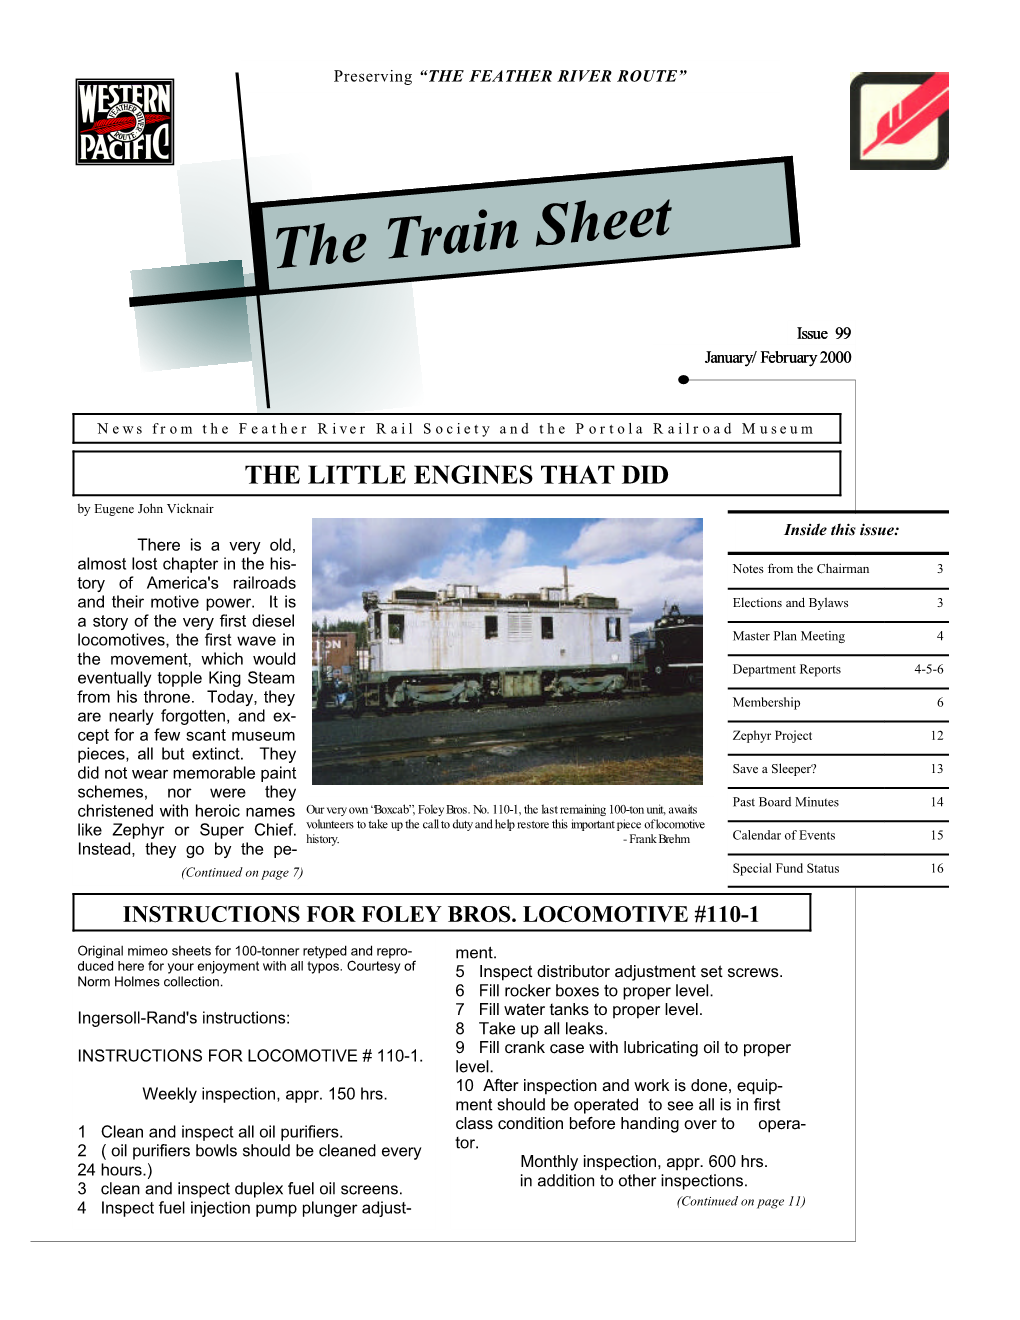 The Train Sheet